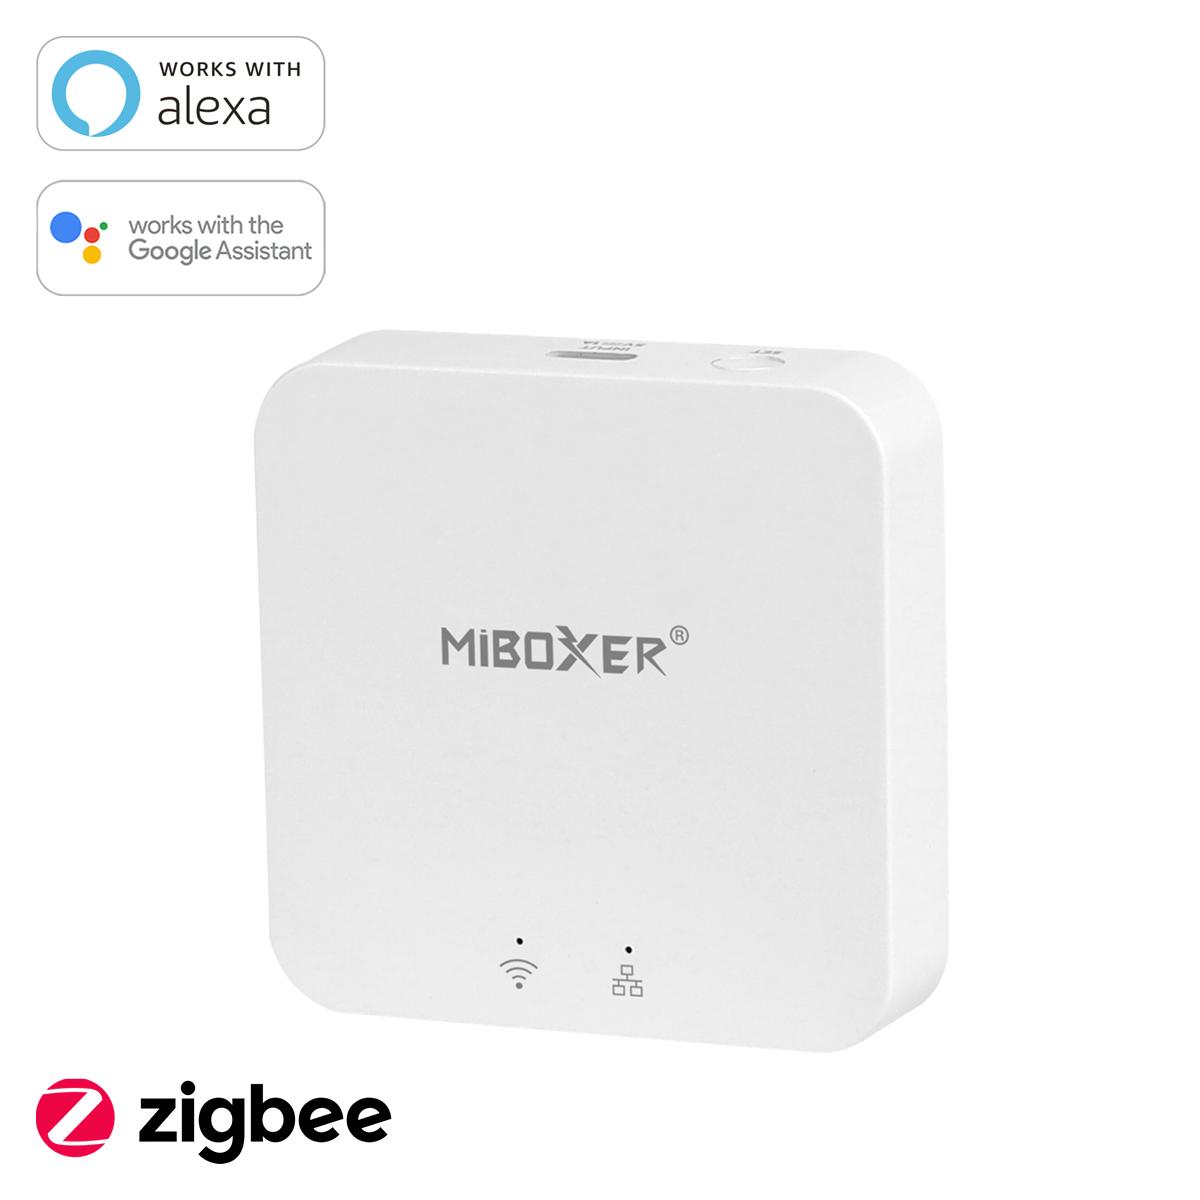 MiBoxer Zigbee 3.0 Wireless Multimode Gateway / Hub / Bridge ZB-BOX3